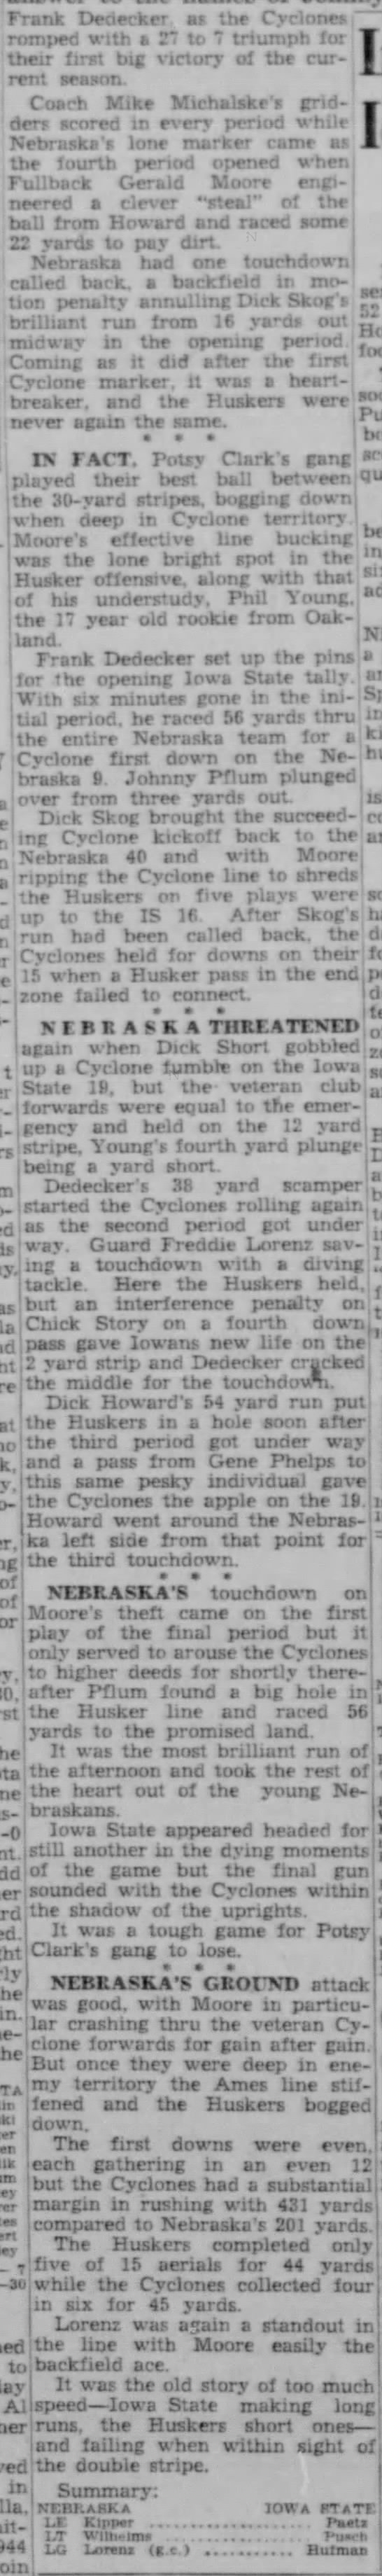 1945 Nebraska-Iowa State football, part 2 - 